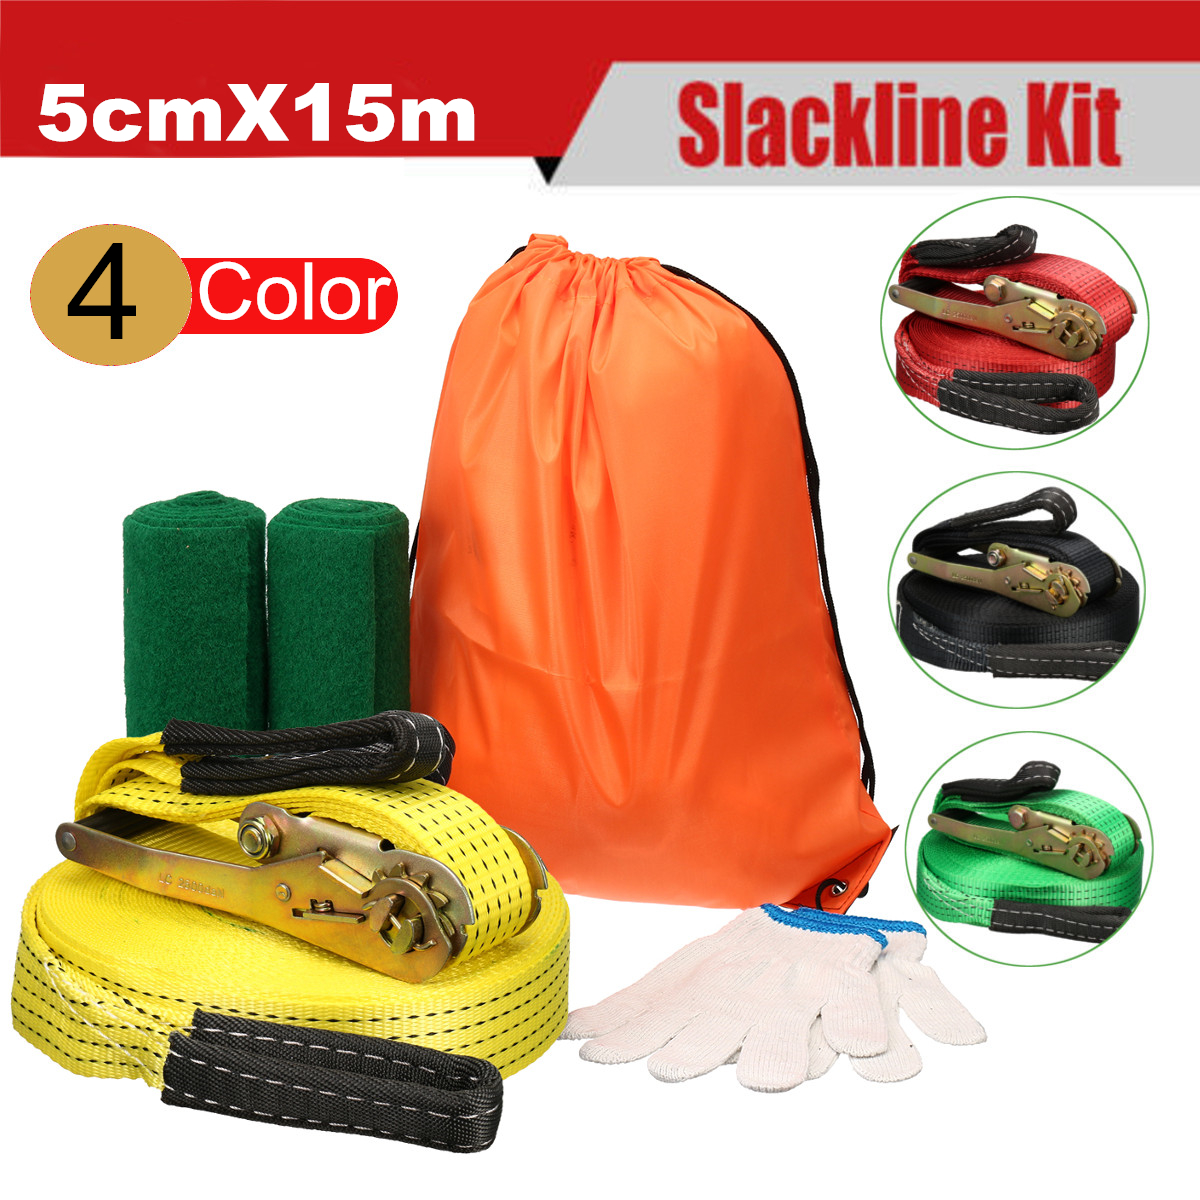 5cmx15m-Slackline-Kit-Base-Balance-Line-With-Tree-Protectors-Ratchet-Arm-Balance-Trainer-Sport-Bag-1451846